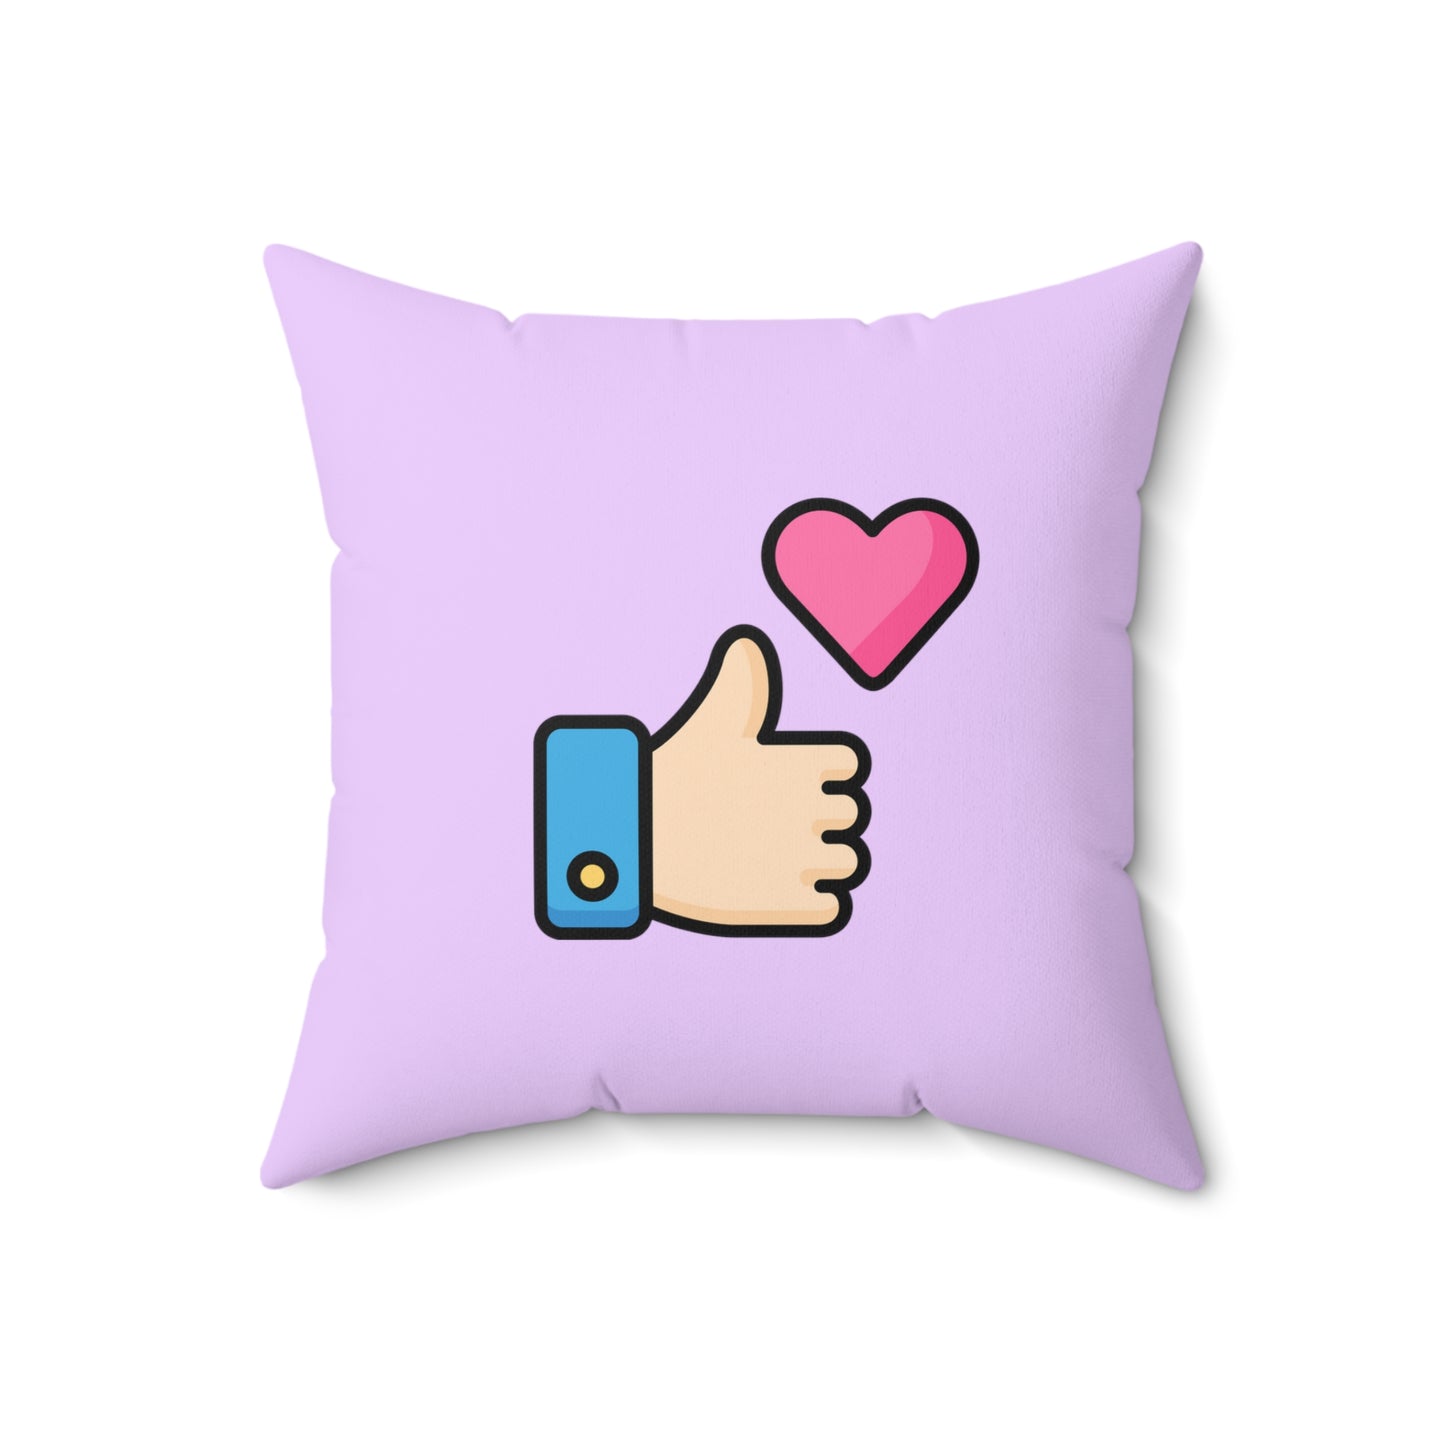 Social Media Thumbs Up Square Pillow - Lilac